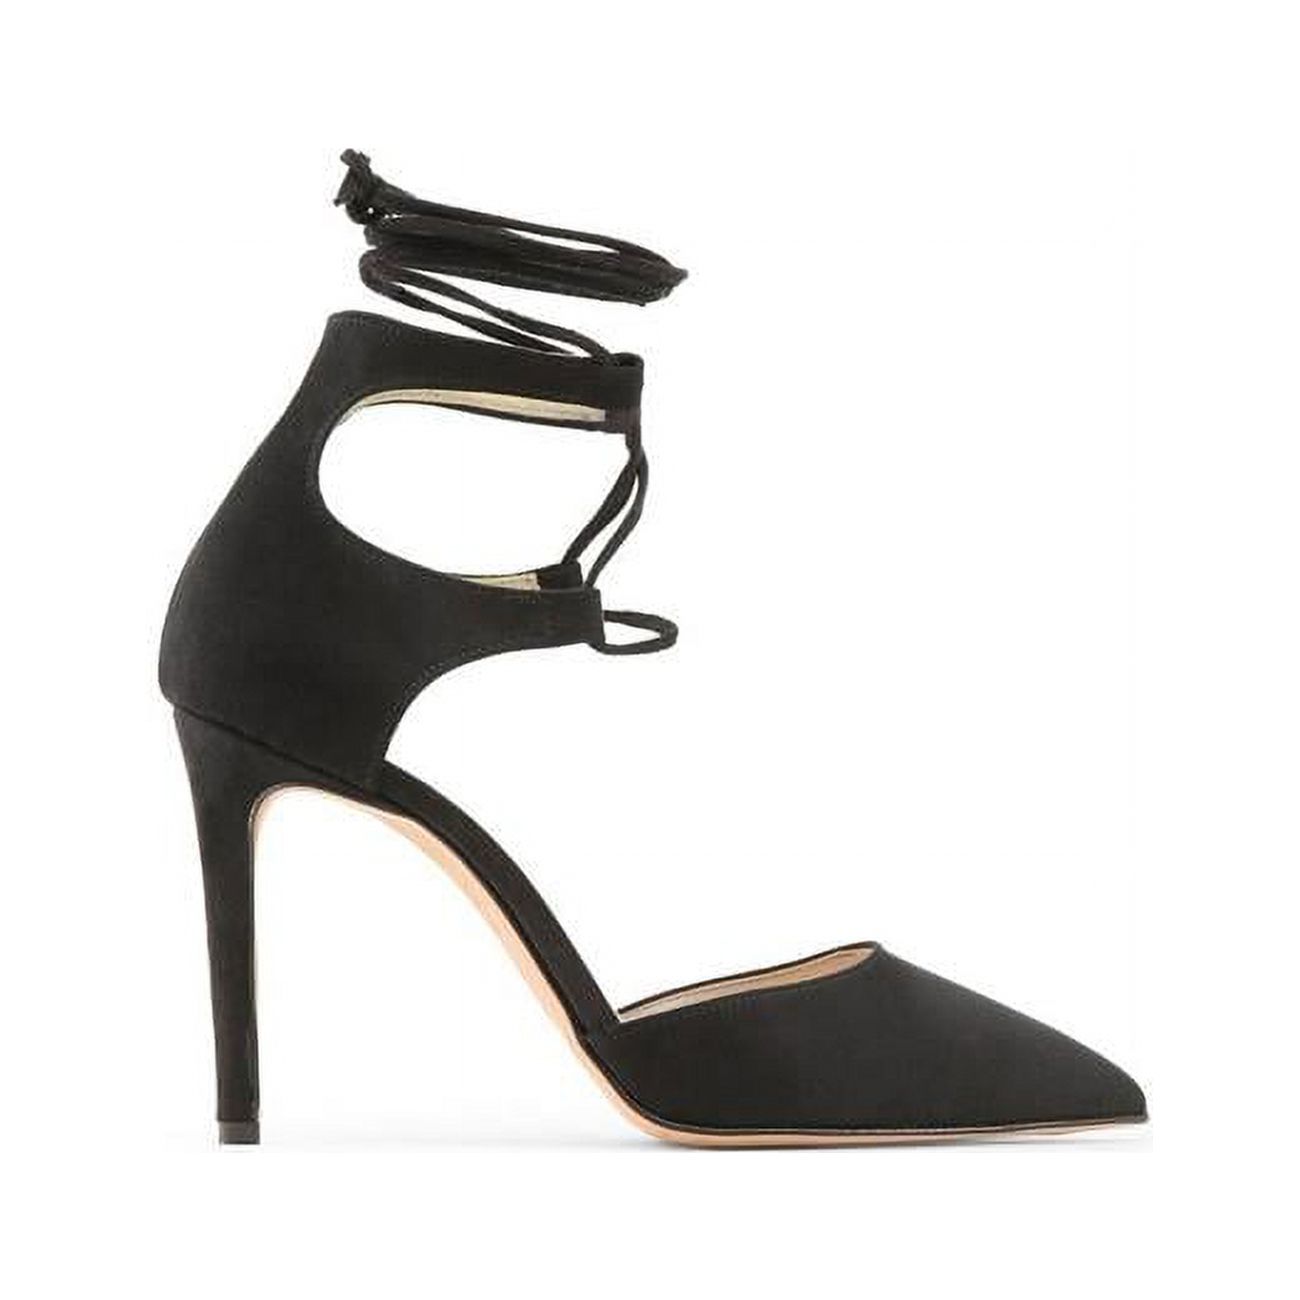 Made in Italia BERENICE-NERO-Black-40 Berenice Womens Pumps & Heels - Black&#44; Size 40 - image 1 of 5